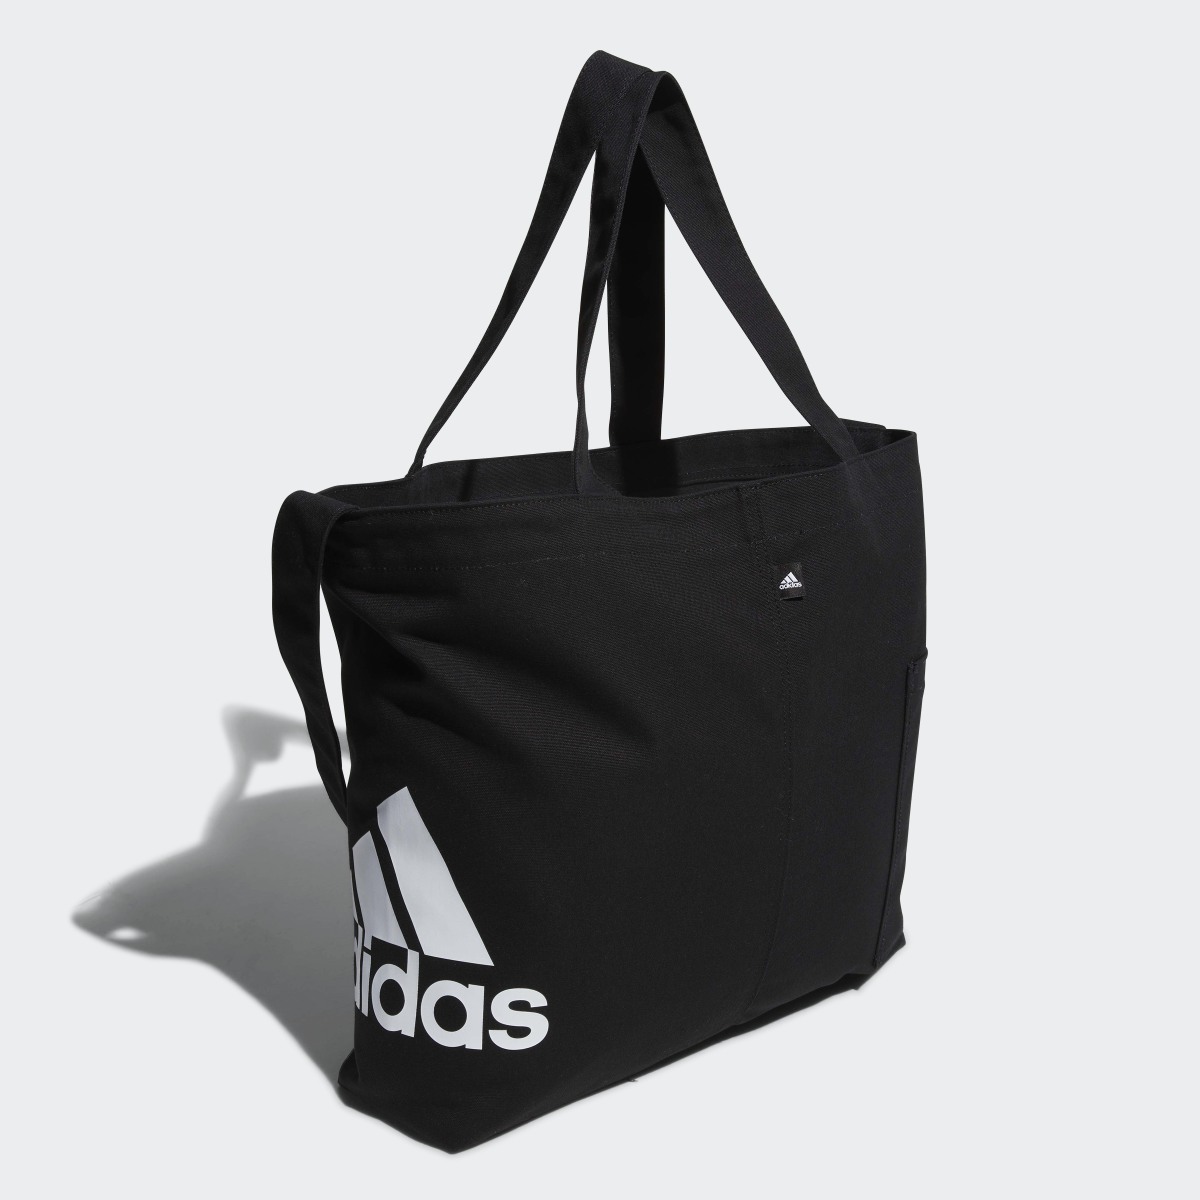 Adidas Canvas Tote Bag. 4